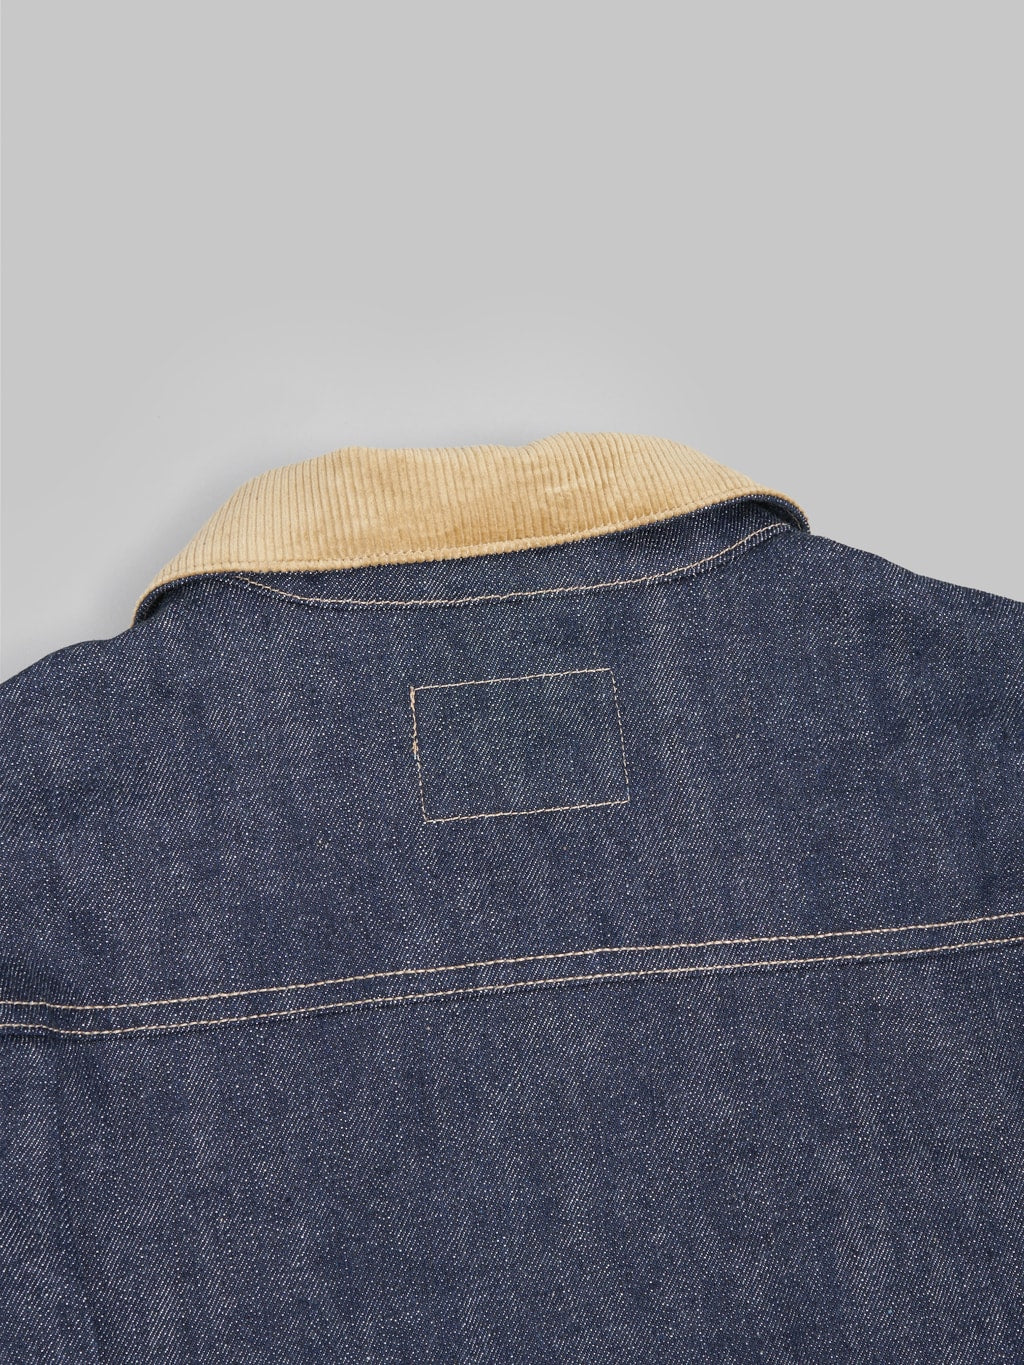 freenote cloth rj 313 ounce indigo selvedge denim jacket  stitiching